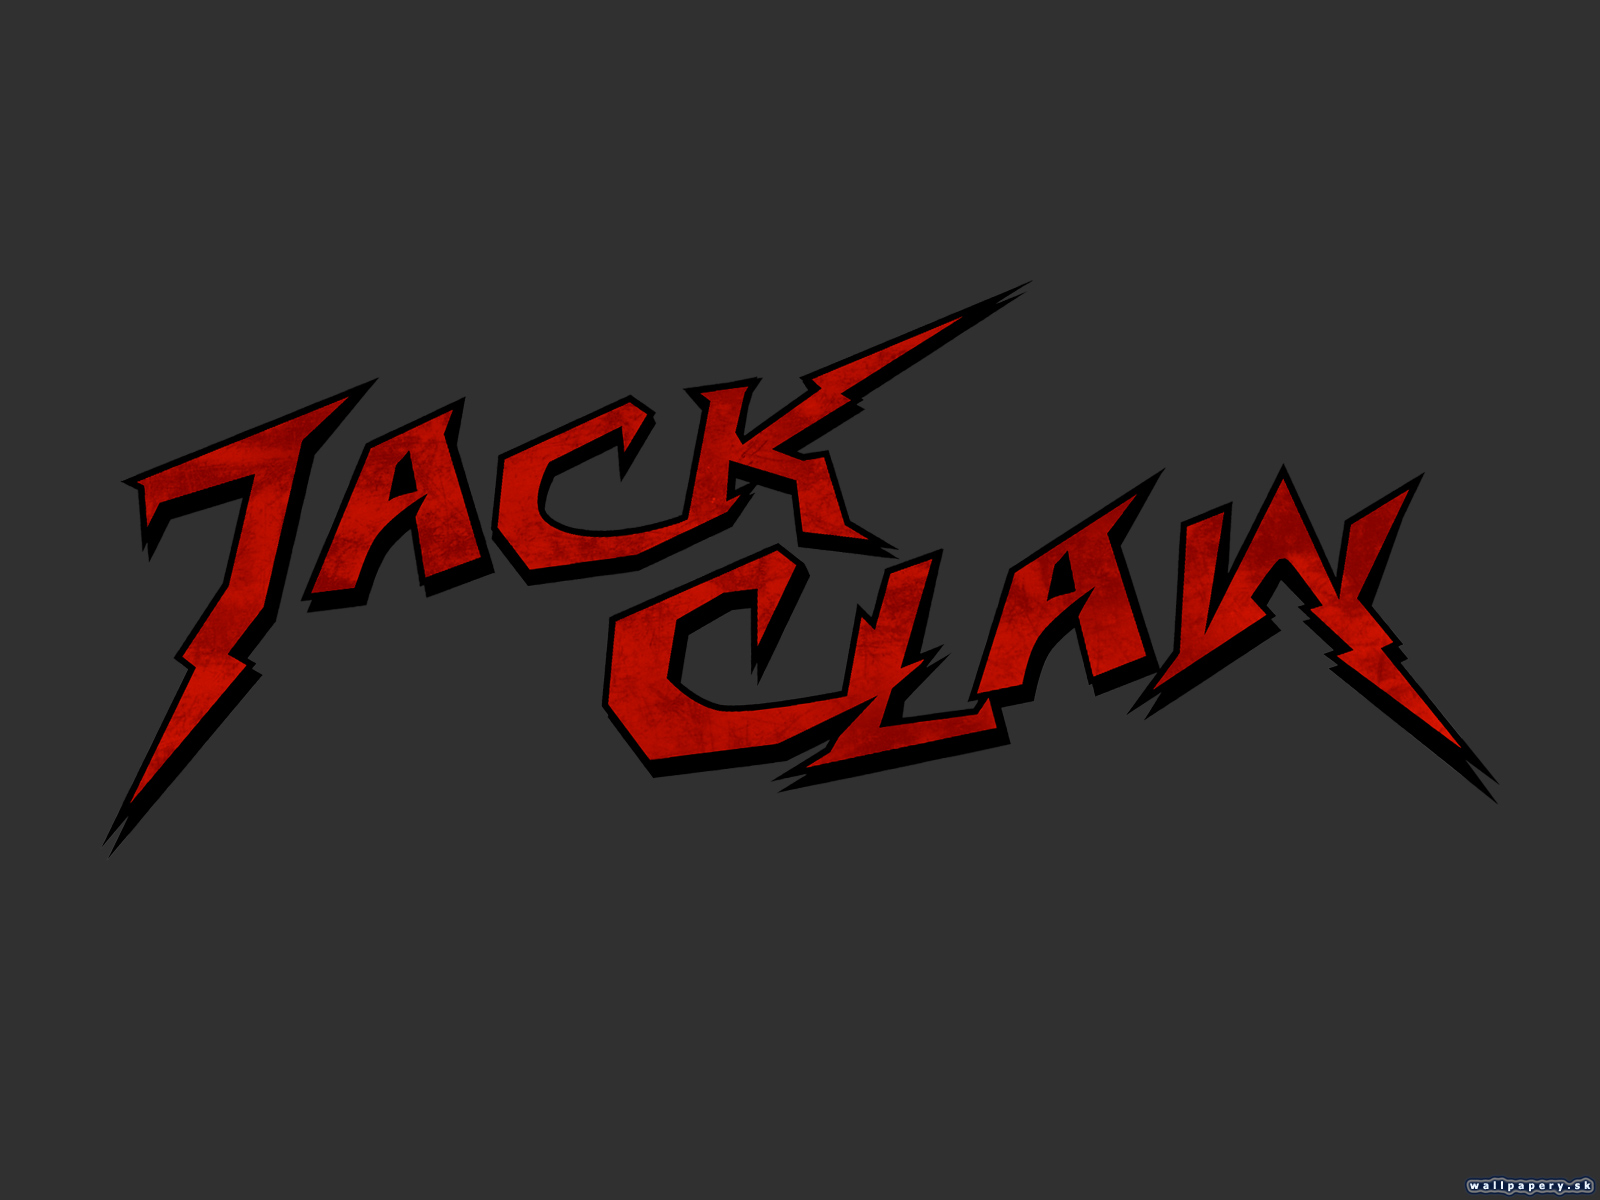 Jack Claw - wallpaper 11